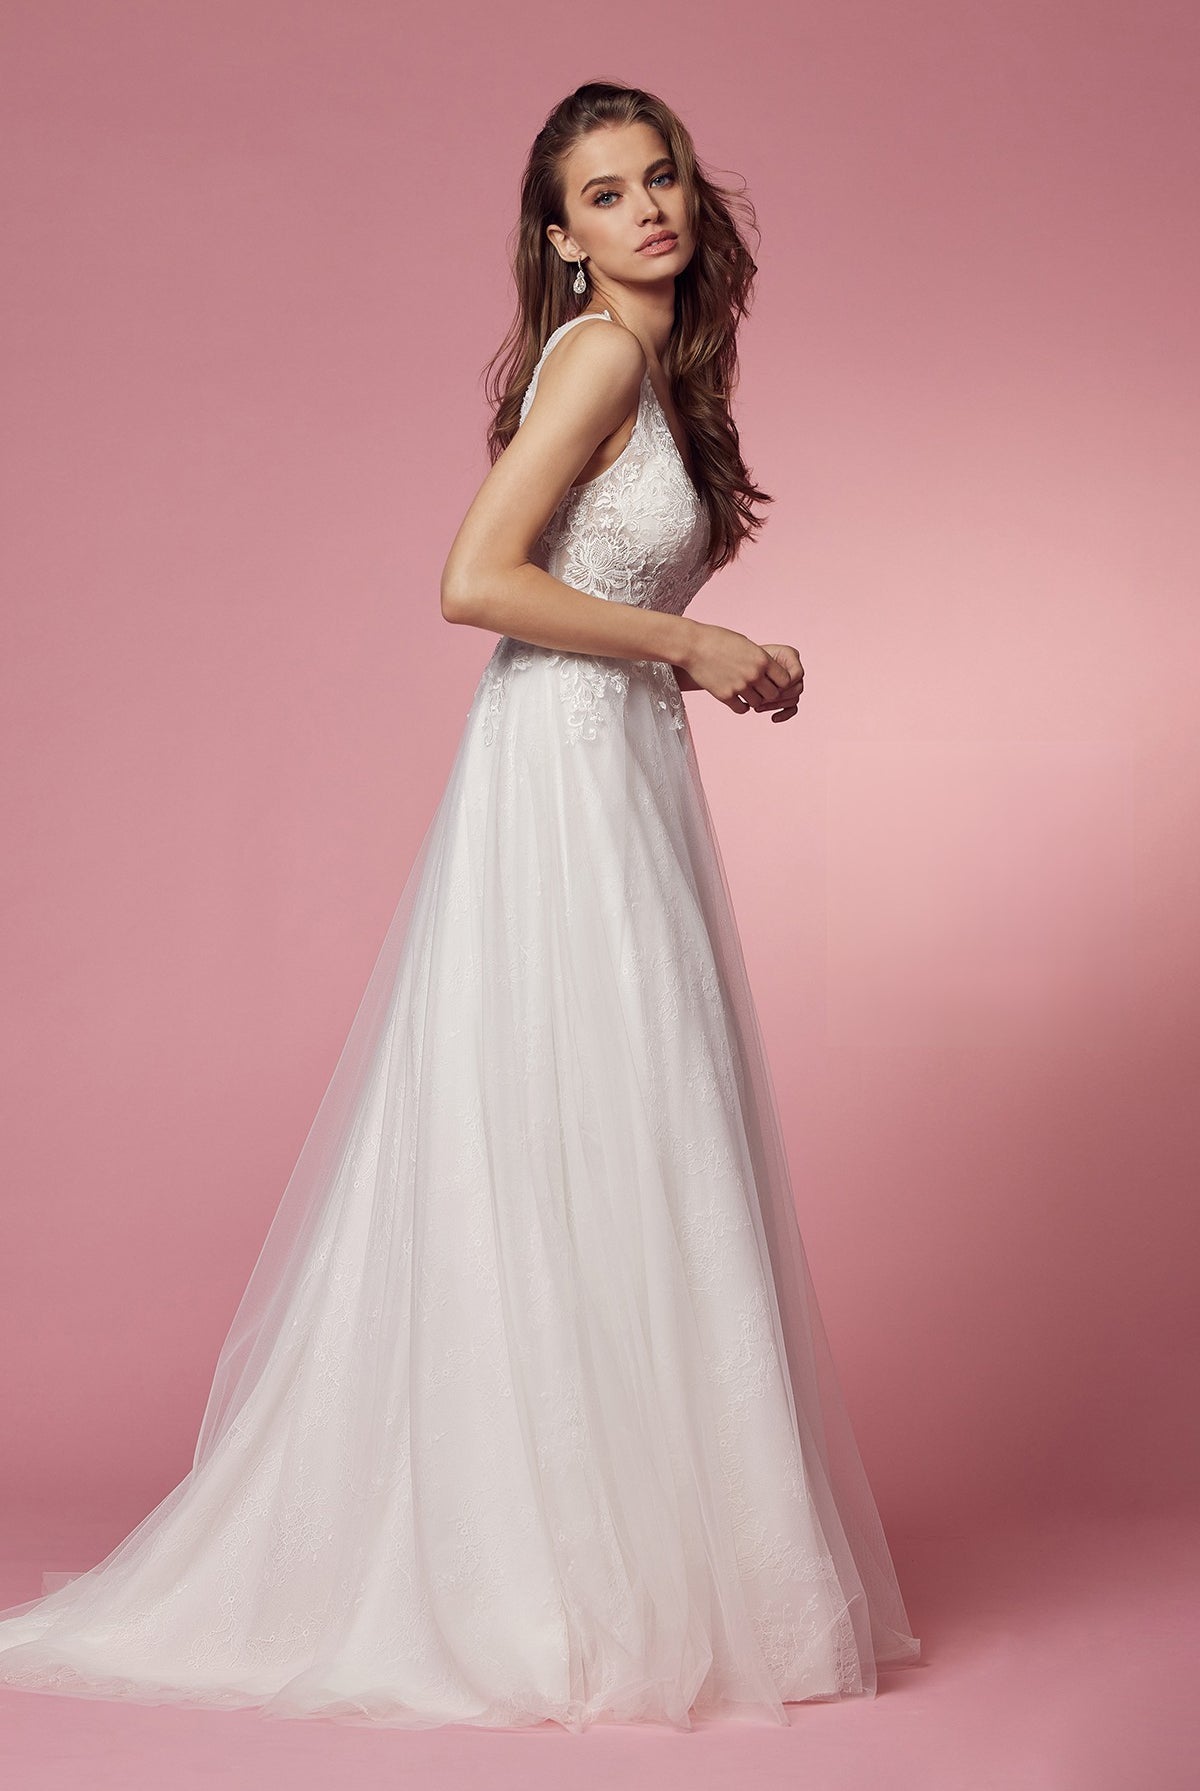 Illusion V-Neck Tulle Skirt A-Line Long Wedding Dress NXJE920-Wedding Dress-smcfashion.com